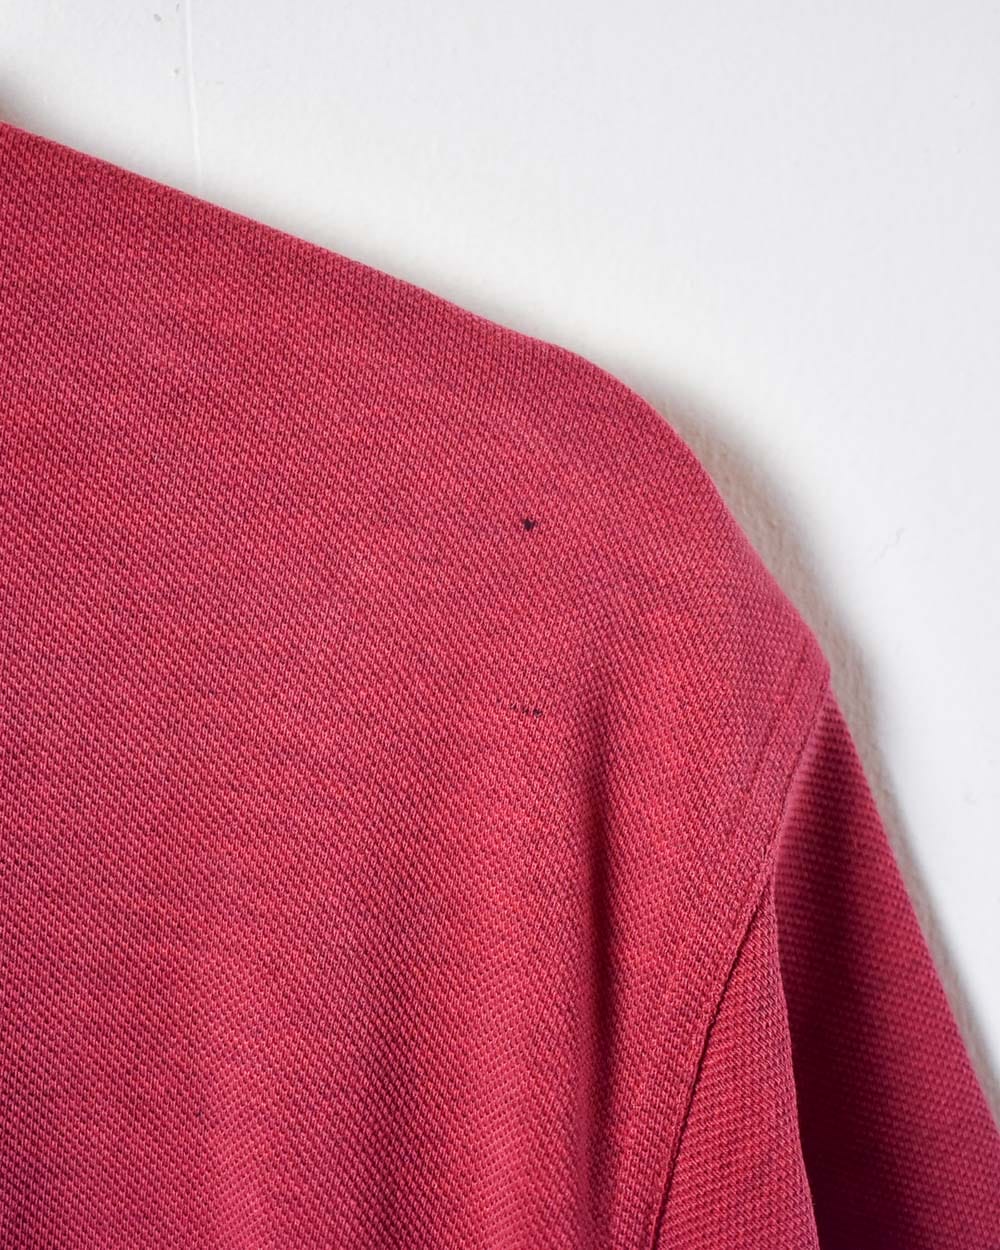 Red Adidas Polo Shirt - Medium